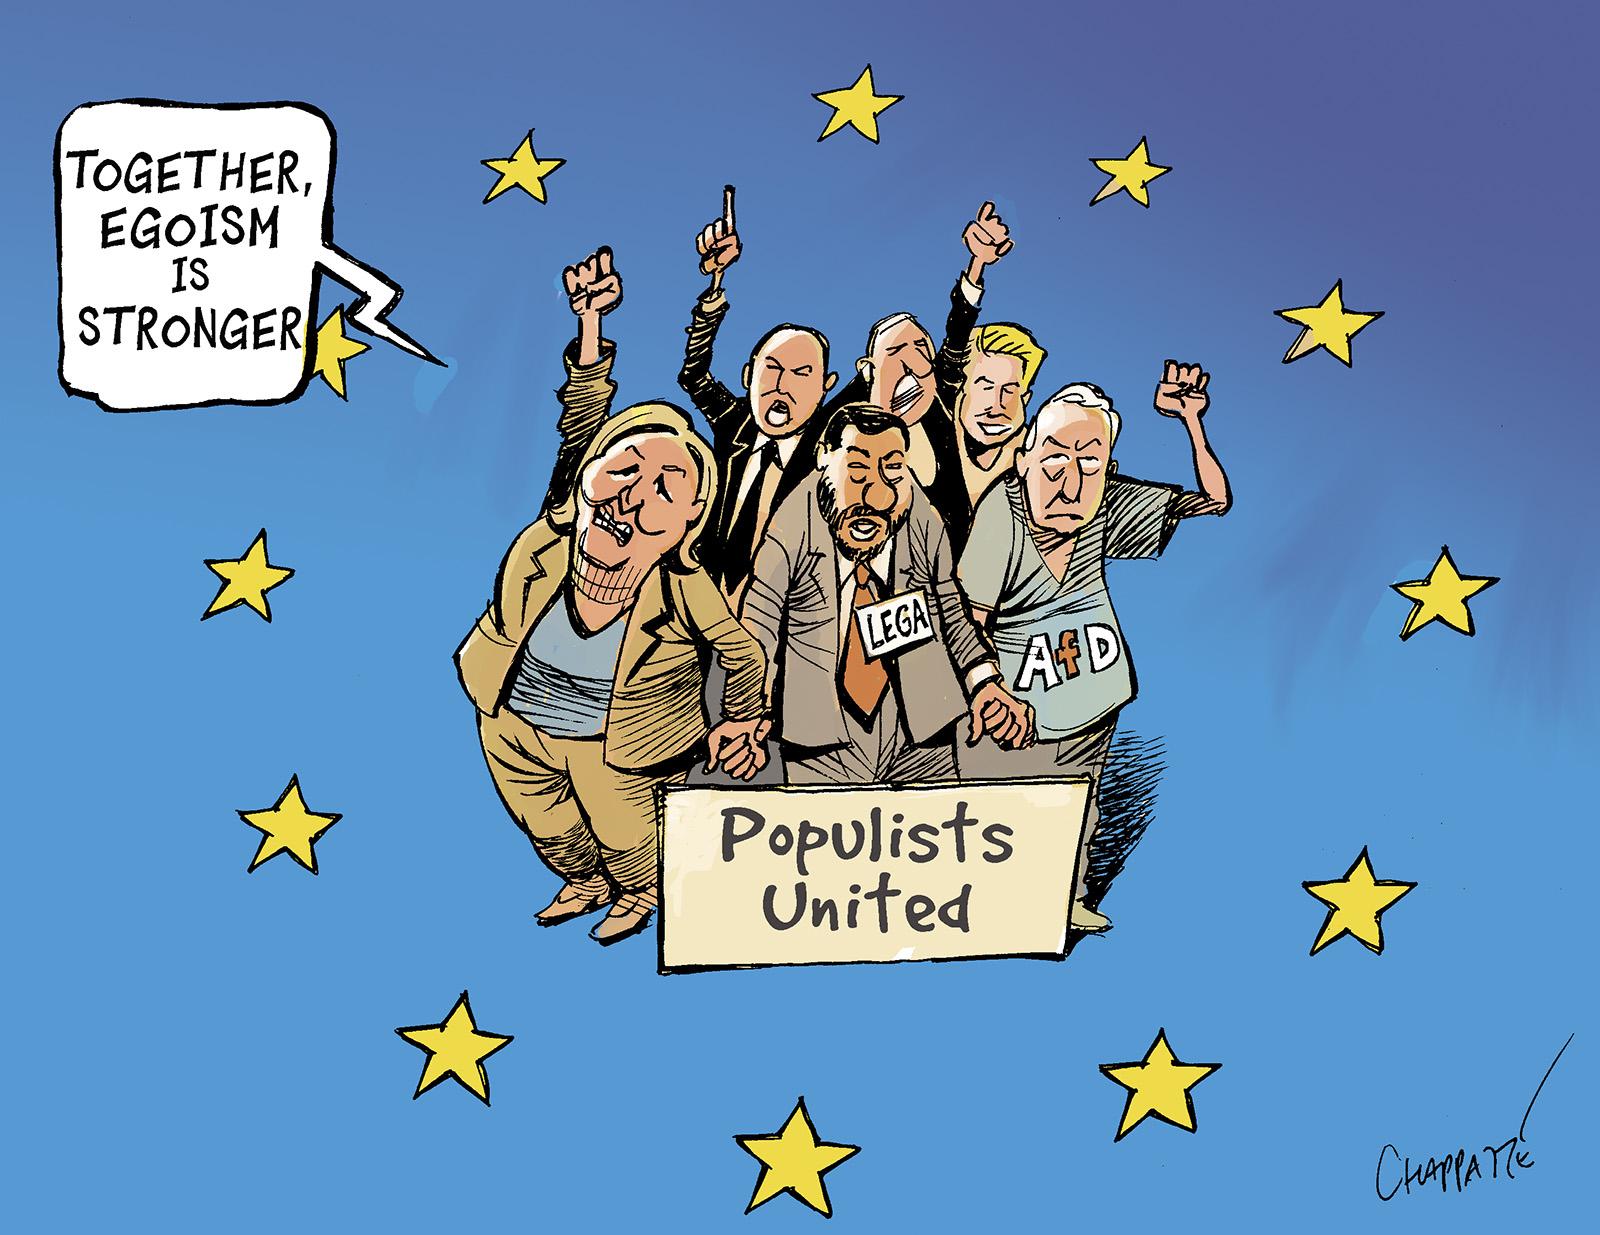 Populists of Europe, unite!